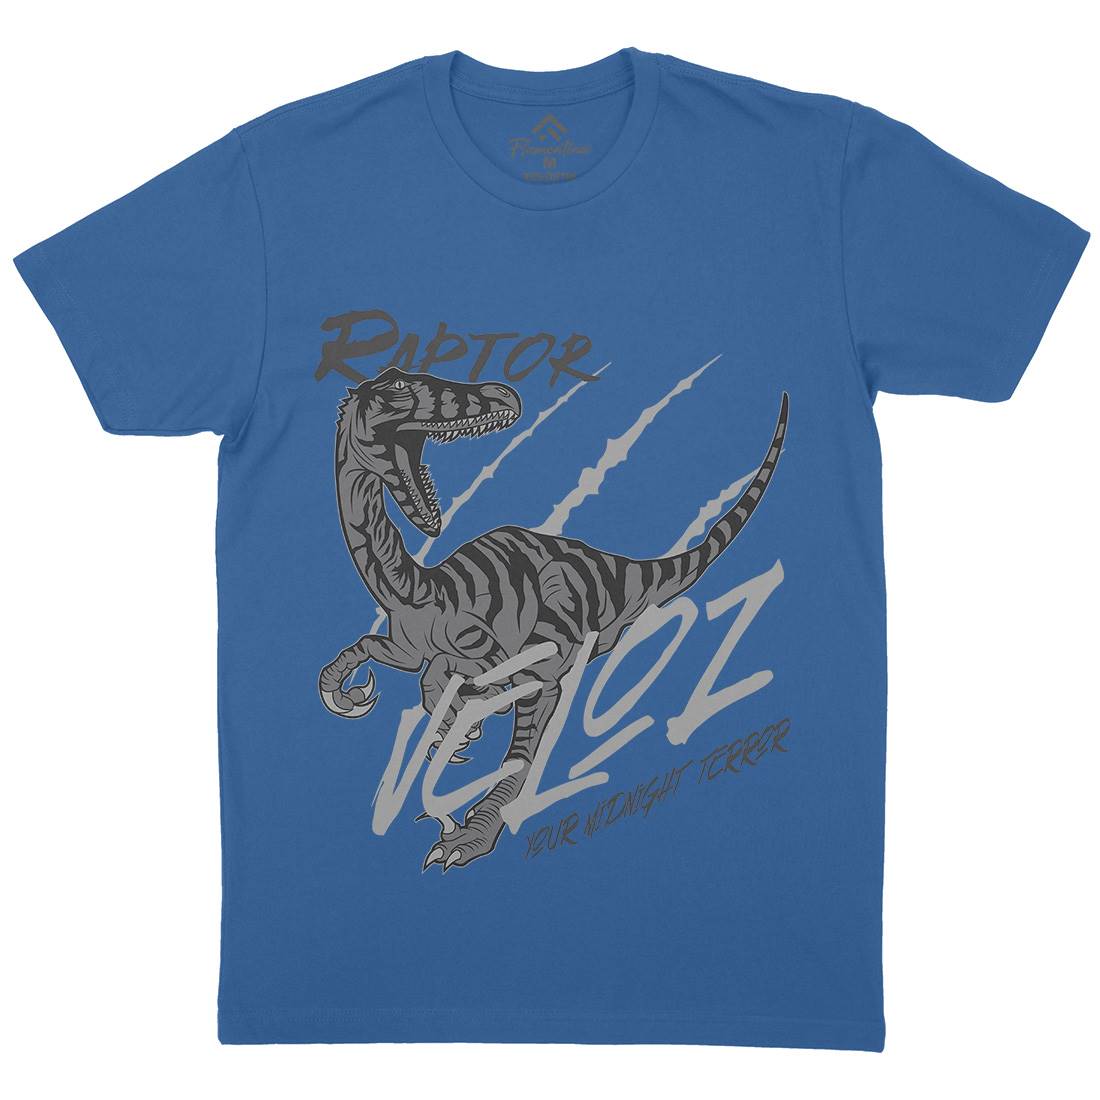 Raptor Terror Mens Crew Neck T-Shirt Animals B753